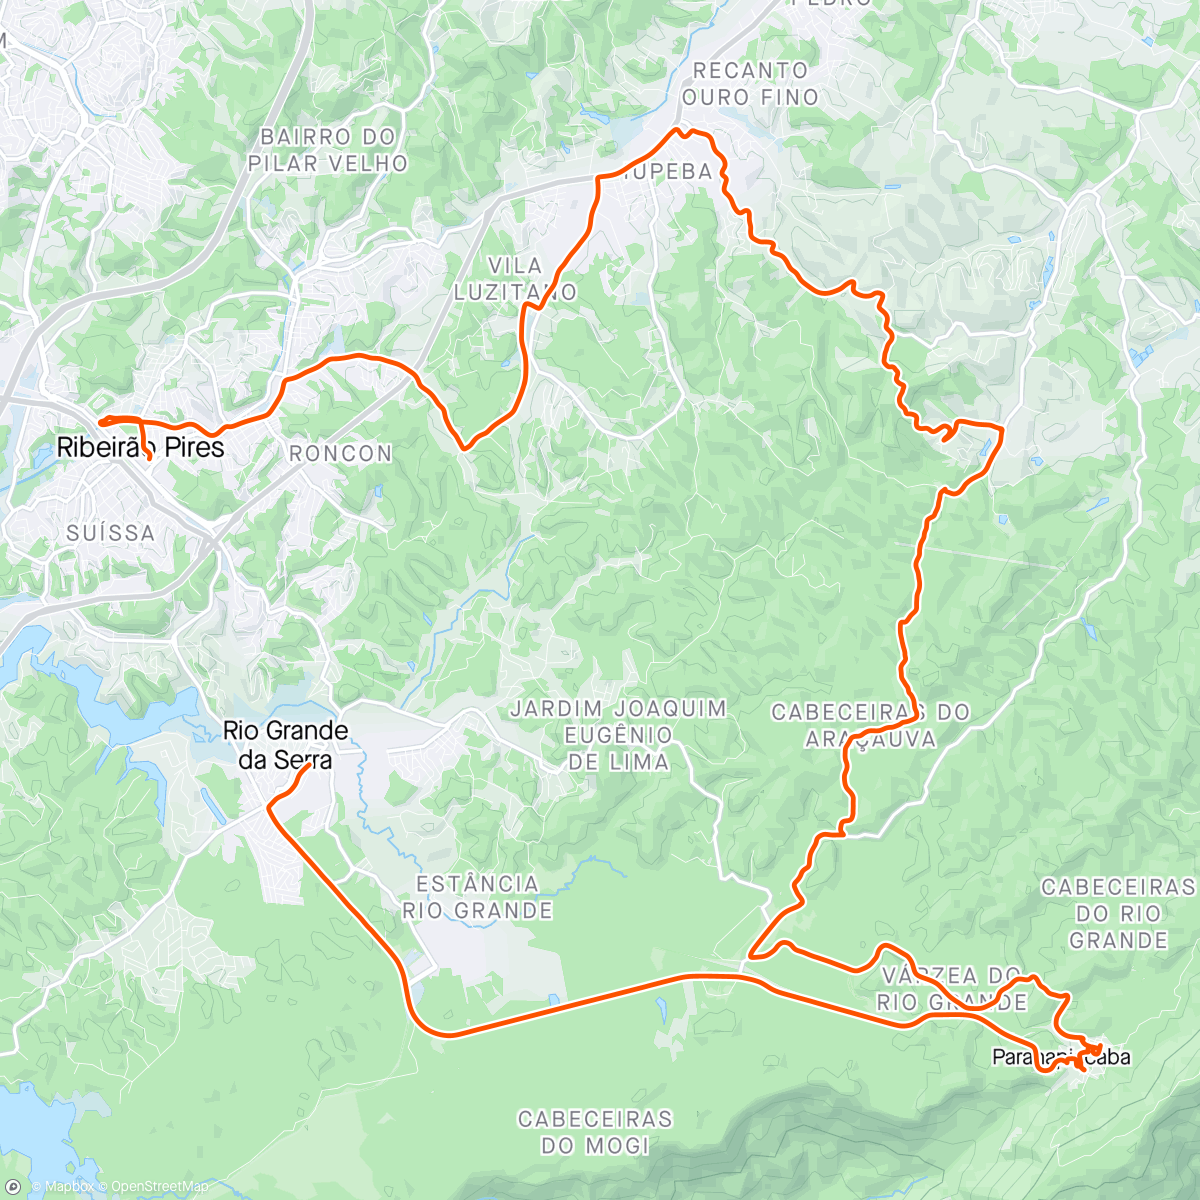 Map of the activity, Montanhas Tailandesa ( Suicidas ) / Magic City/ Paranapiacaba.  VLW GALERA.  MUITA RESENHA COMO SEMPRE.  KKKKKKKK